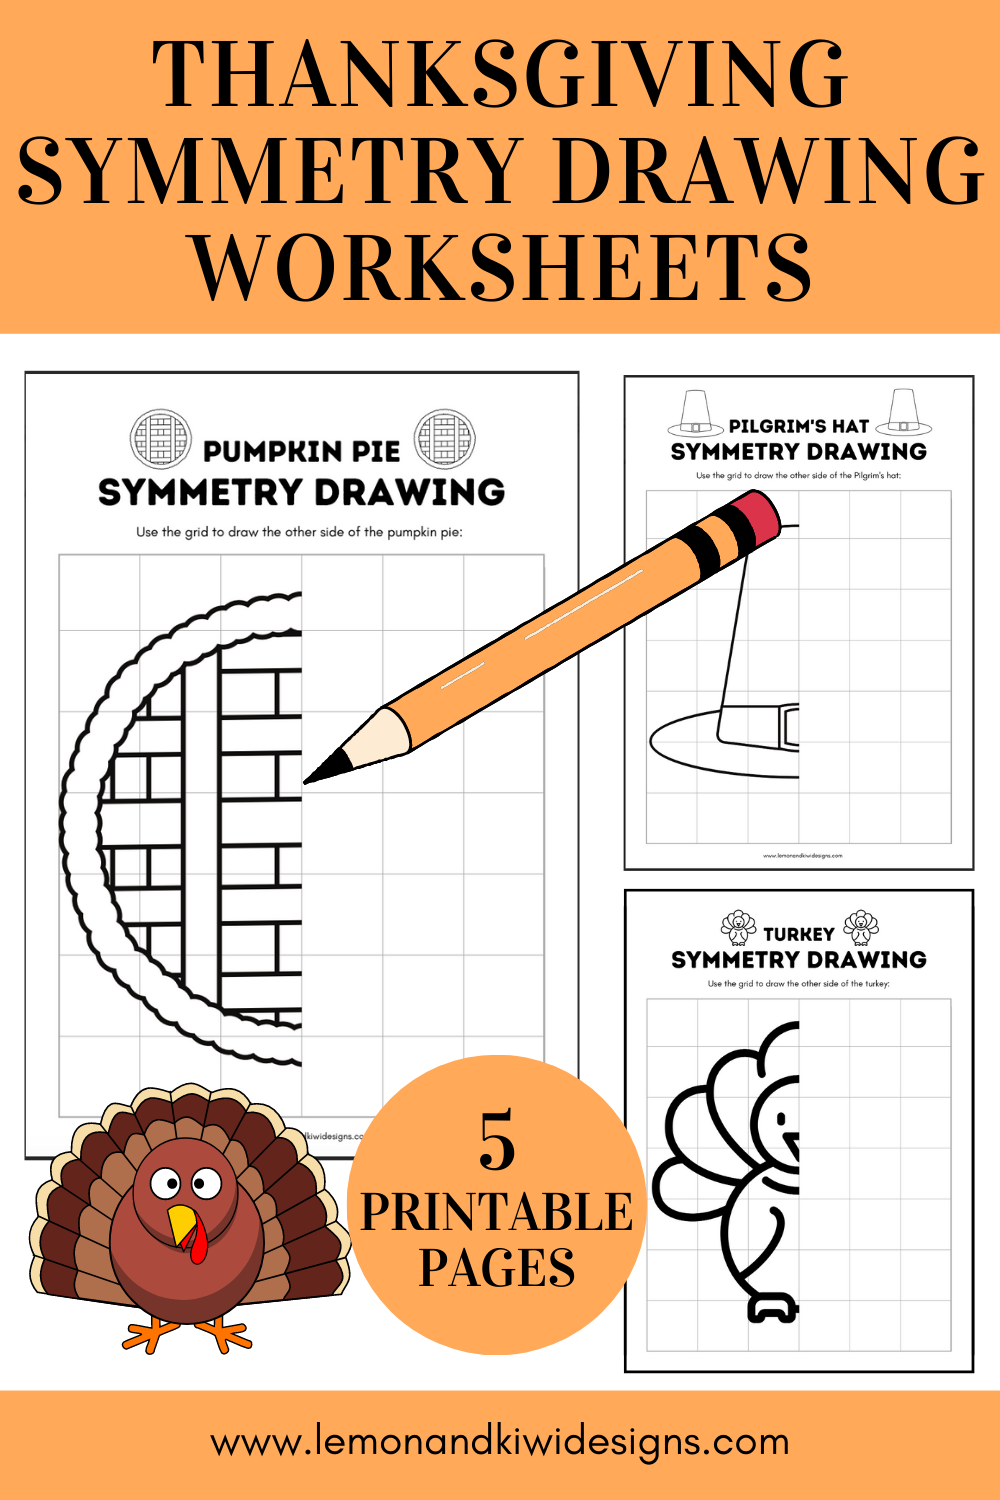 Printable Thanksgiving Symmetry Drawing Worksheets